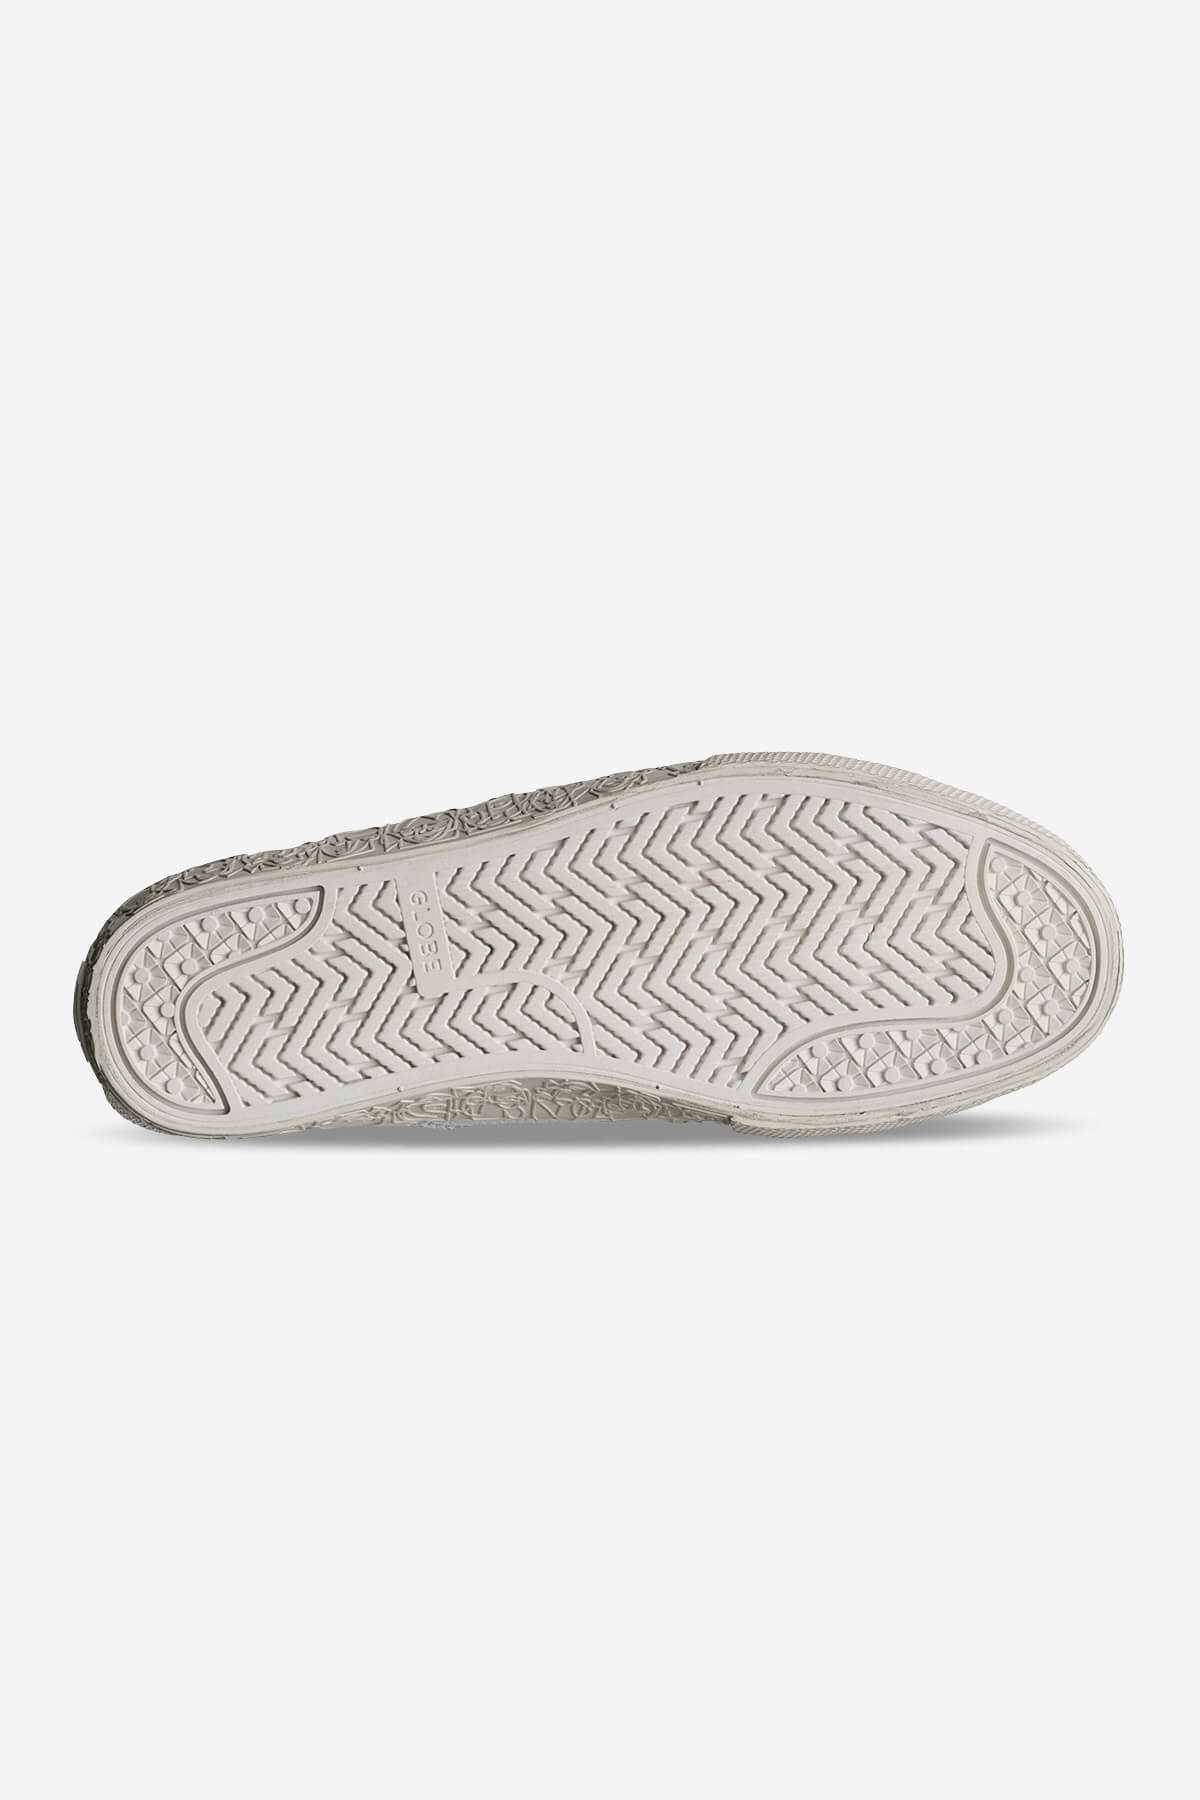 Globe - Surplus - White/Montano - skateboard Chaussures